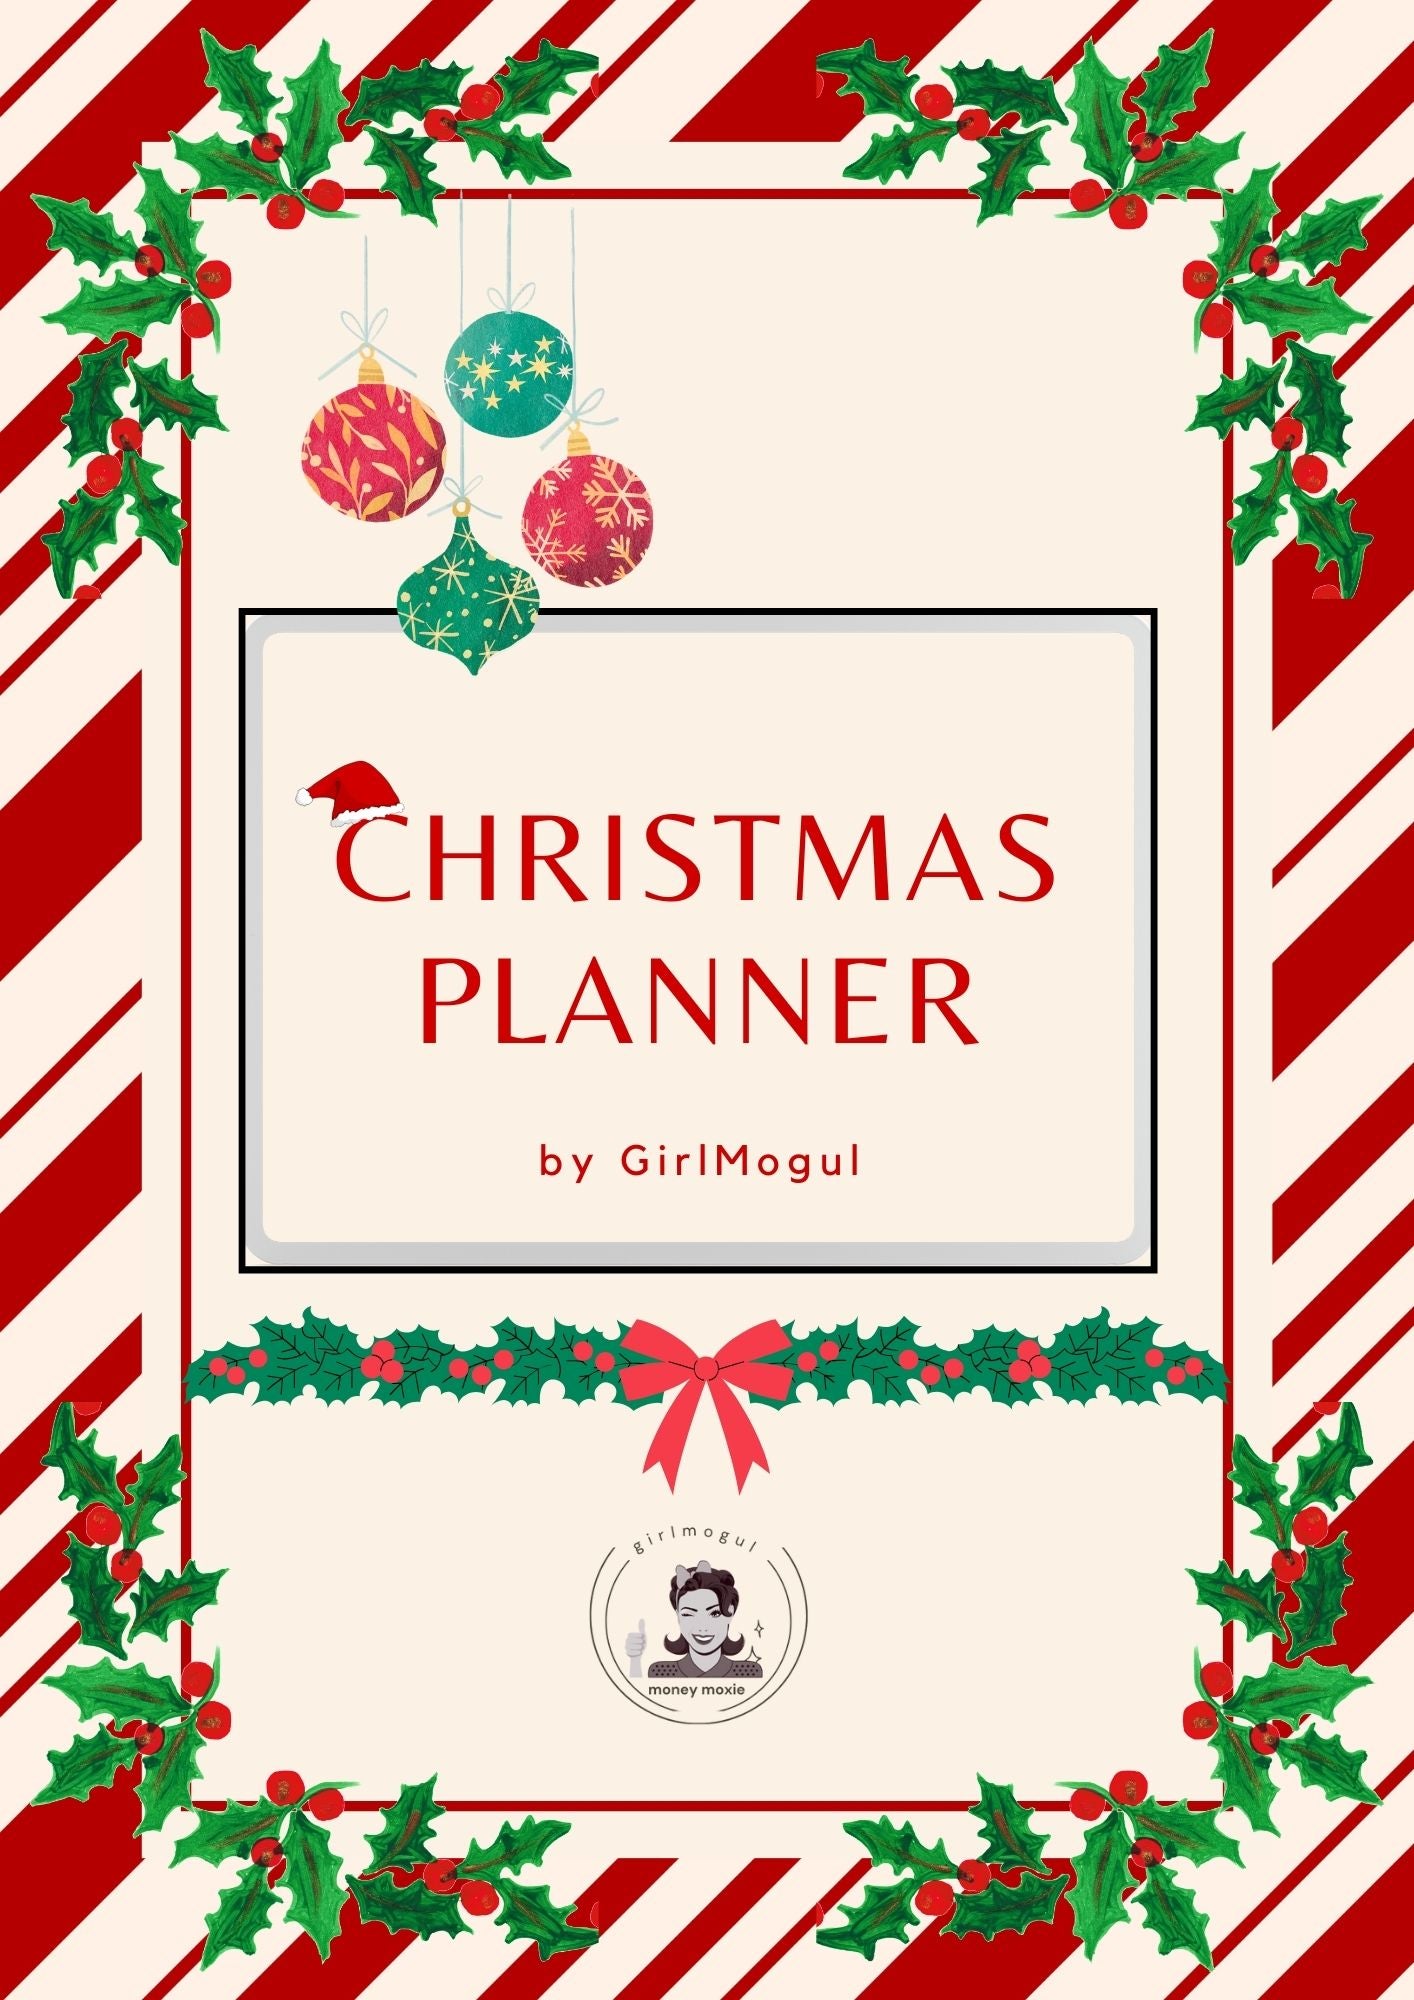 Christmas Holiday Planner`